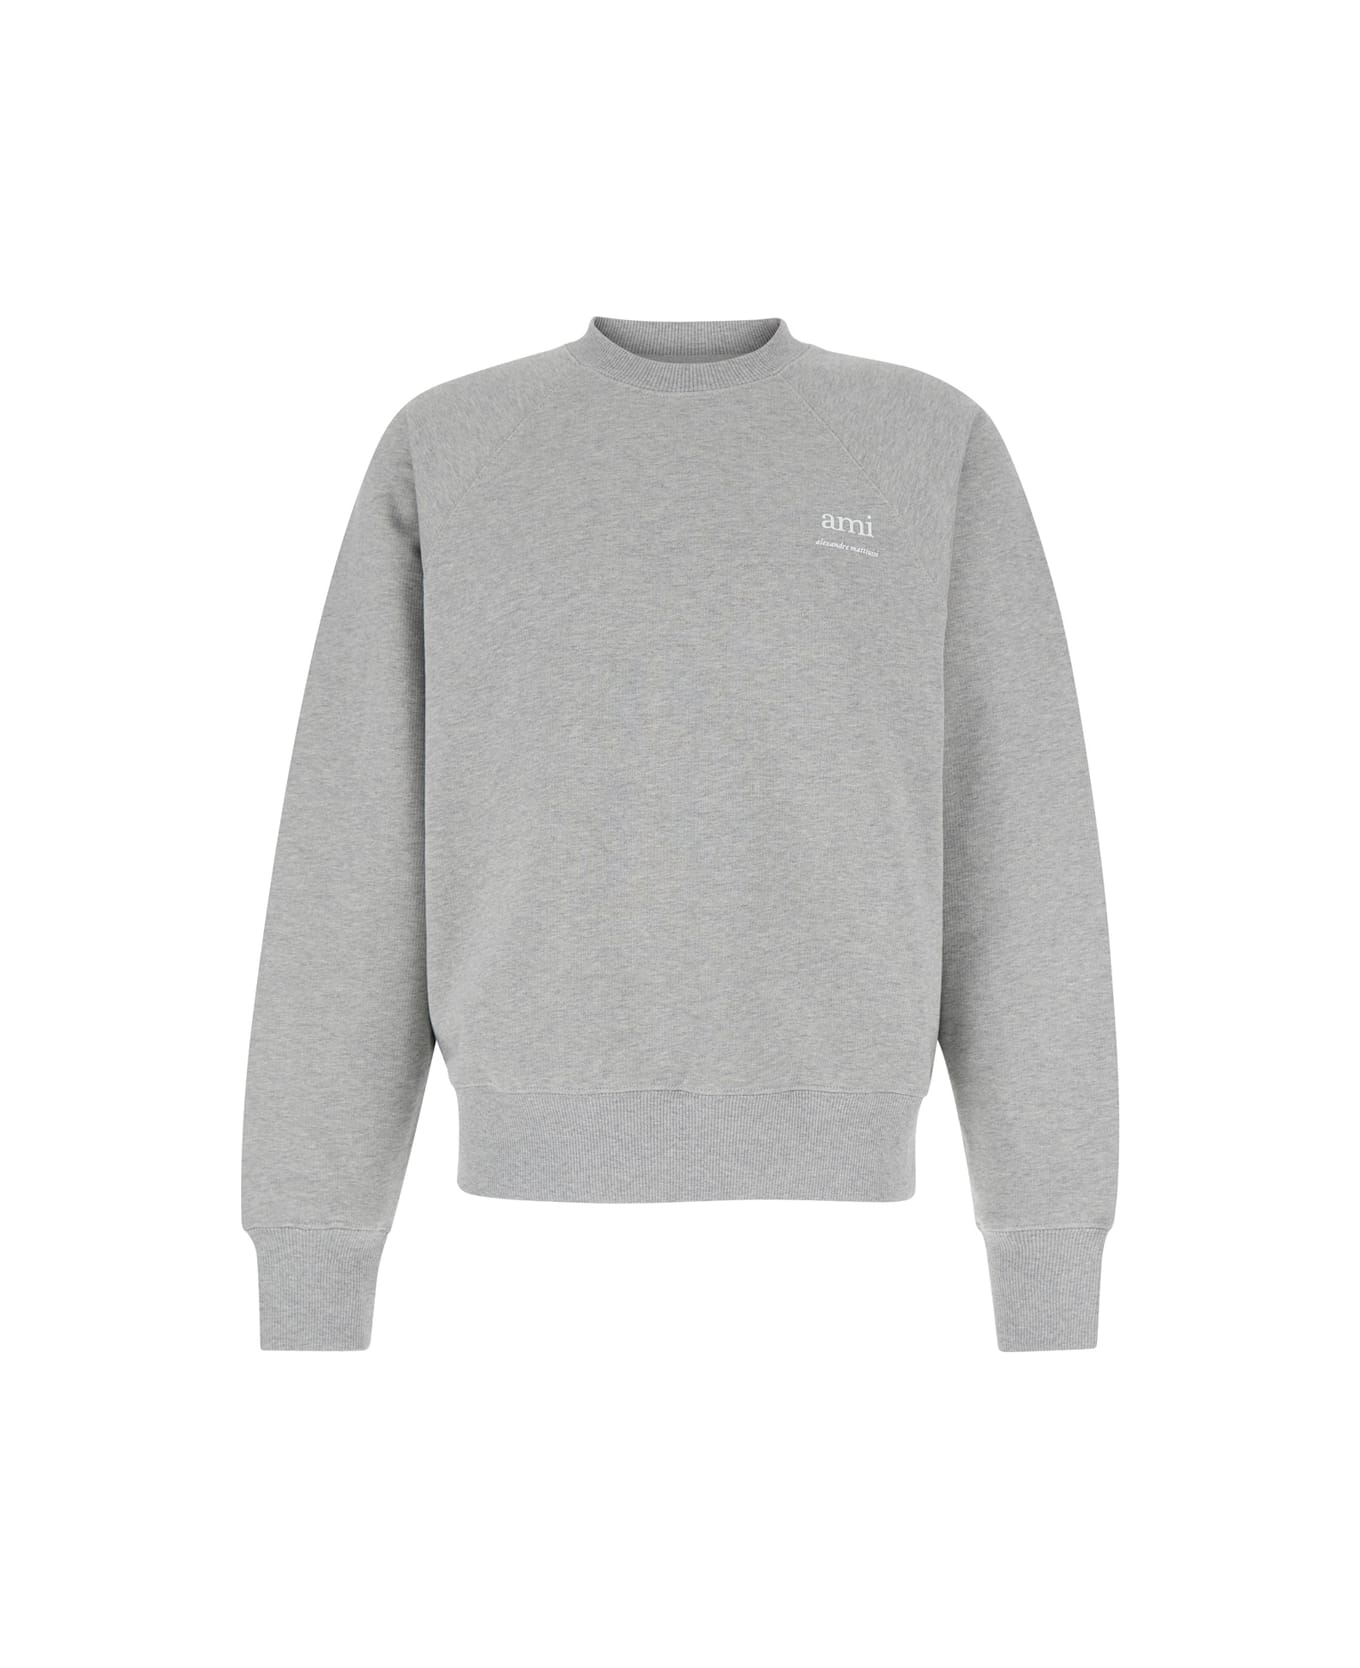 Ami Alexandre Mattiussi Grey Crew Neck Sweater In Cotton Man - Grey フリース